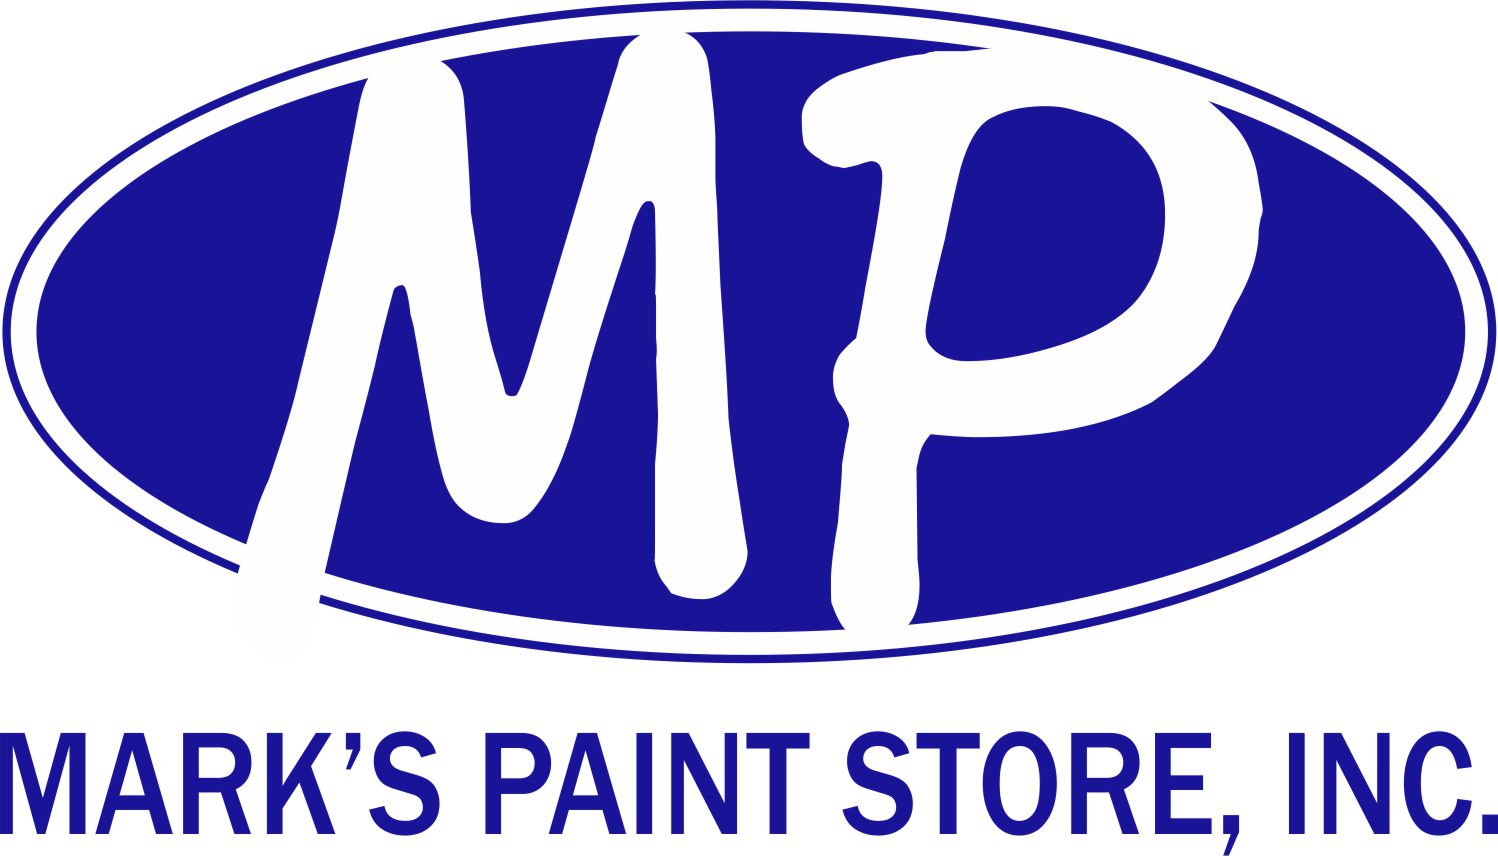 Marks Paint Store Inc Photo